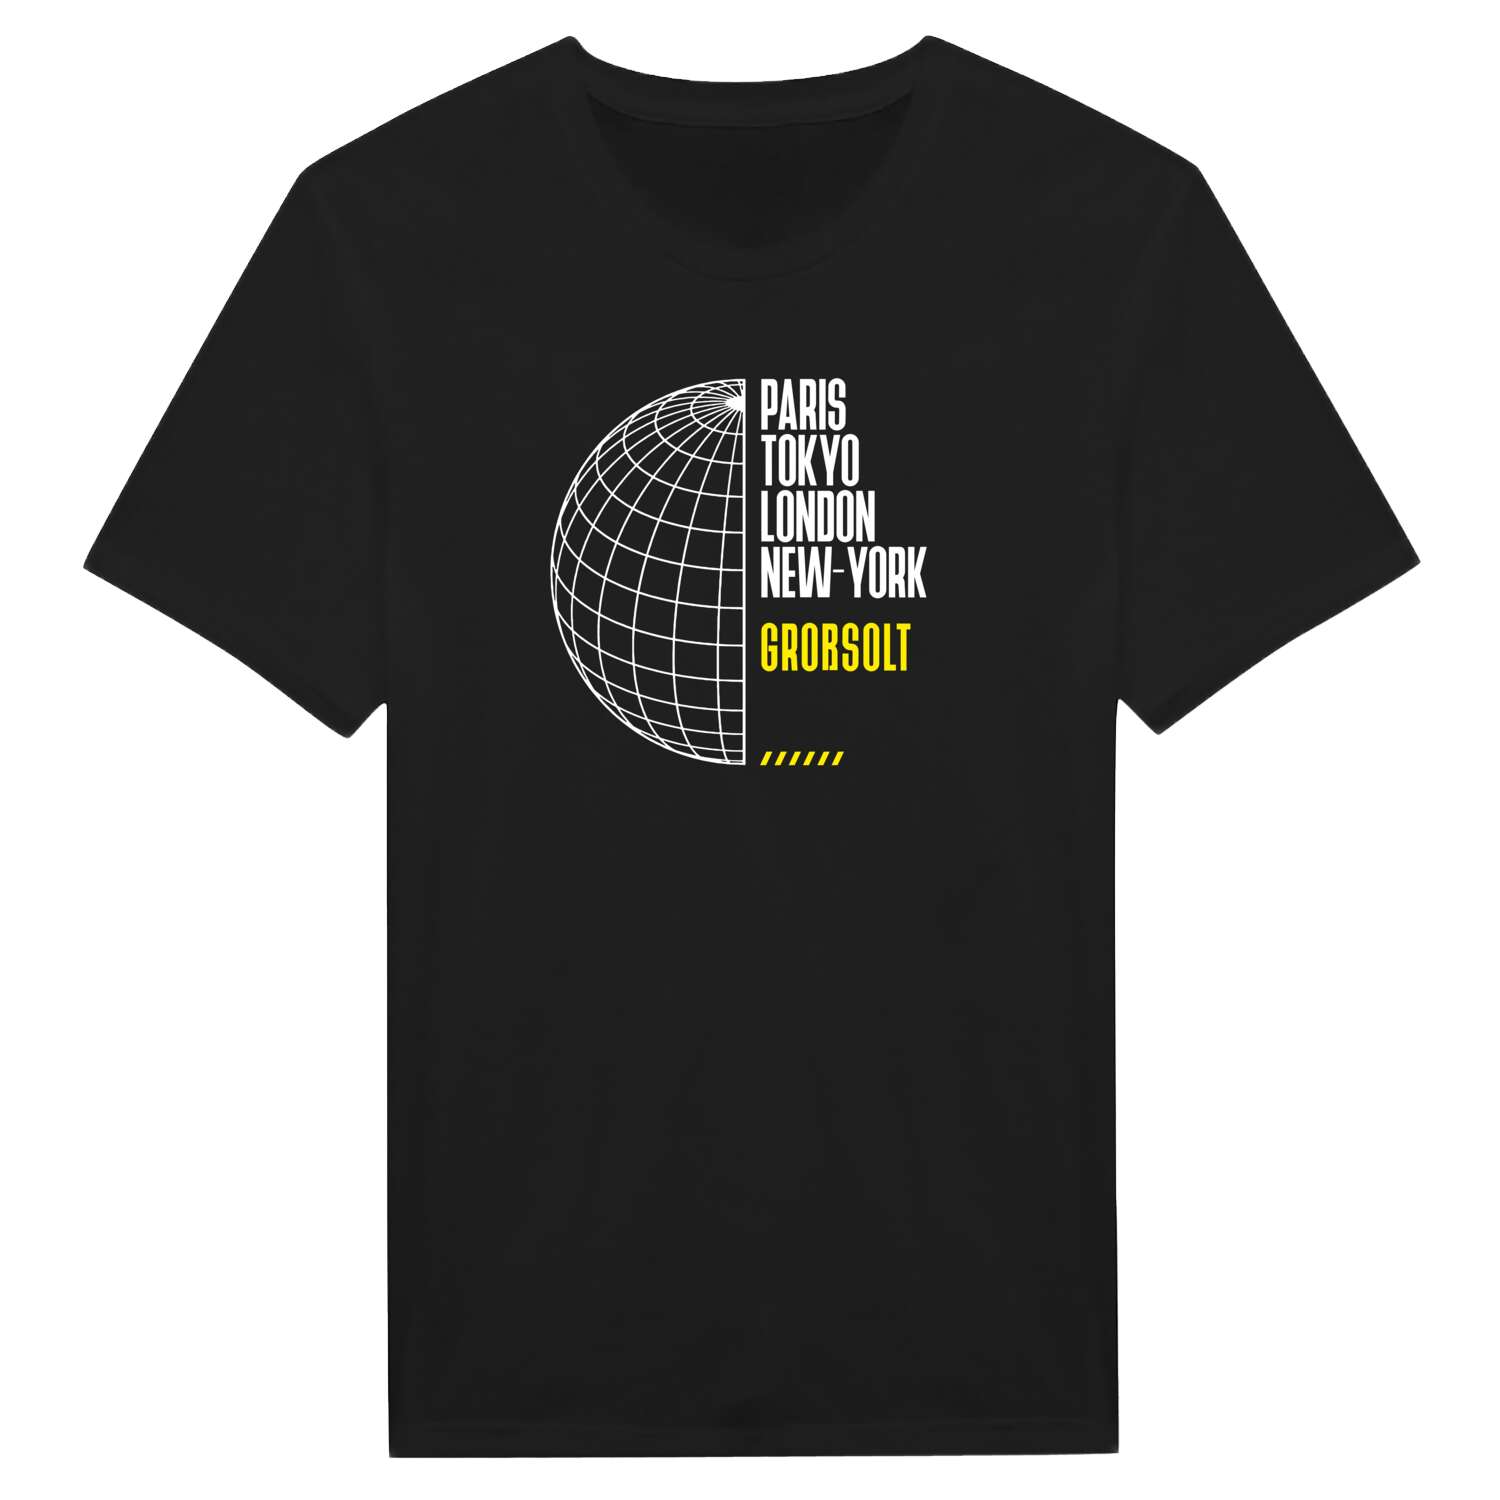 Großsolt T-Shirt »Paris Tokyo London«